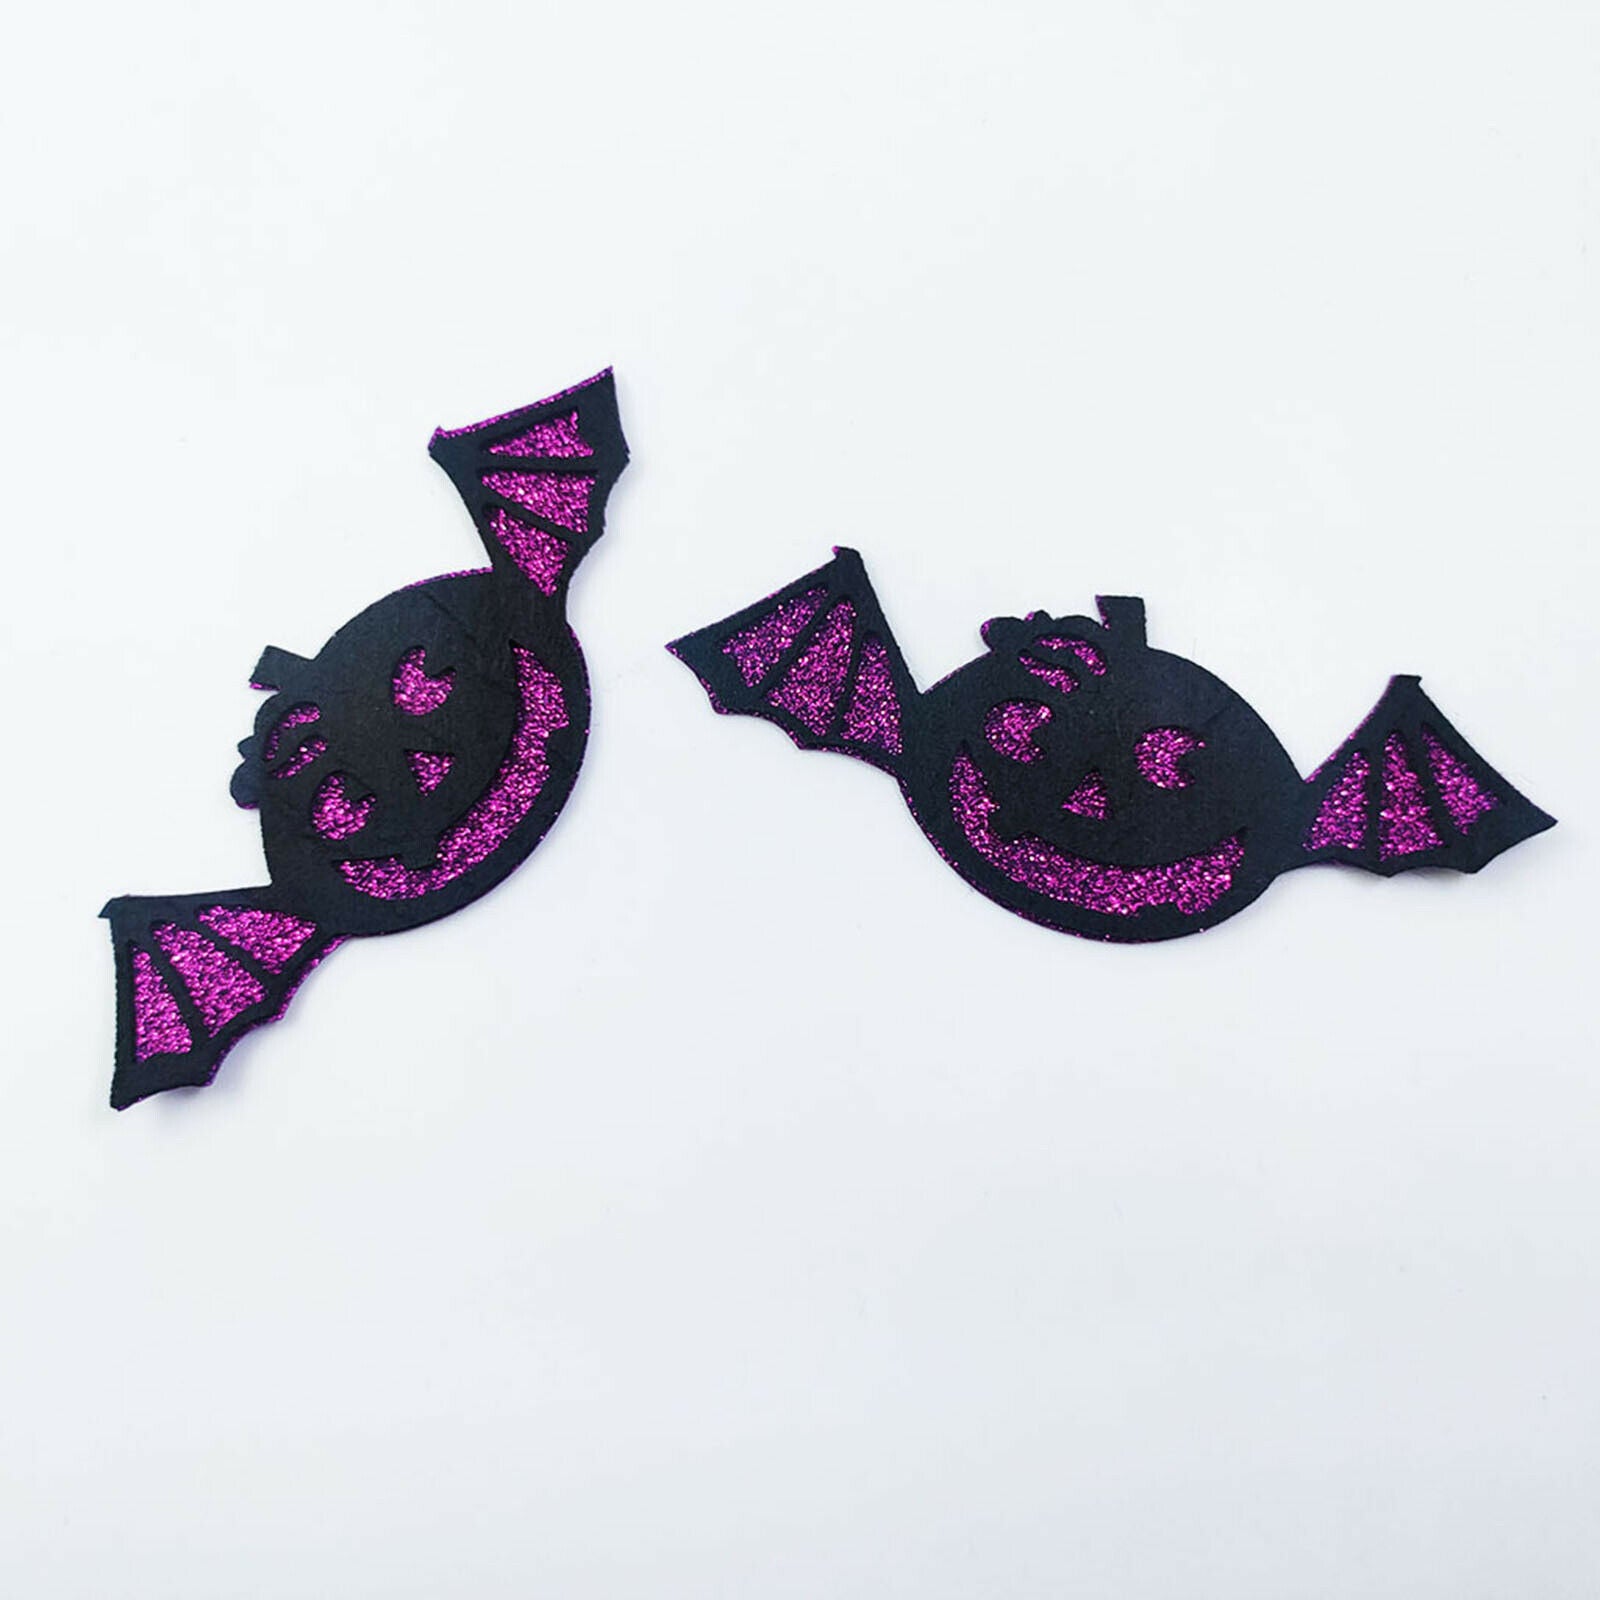 16Pcs Mixed Halloween Applique Patches Pumpkin Bat Spiders Embroidered